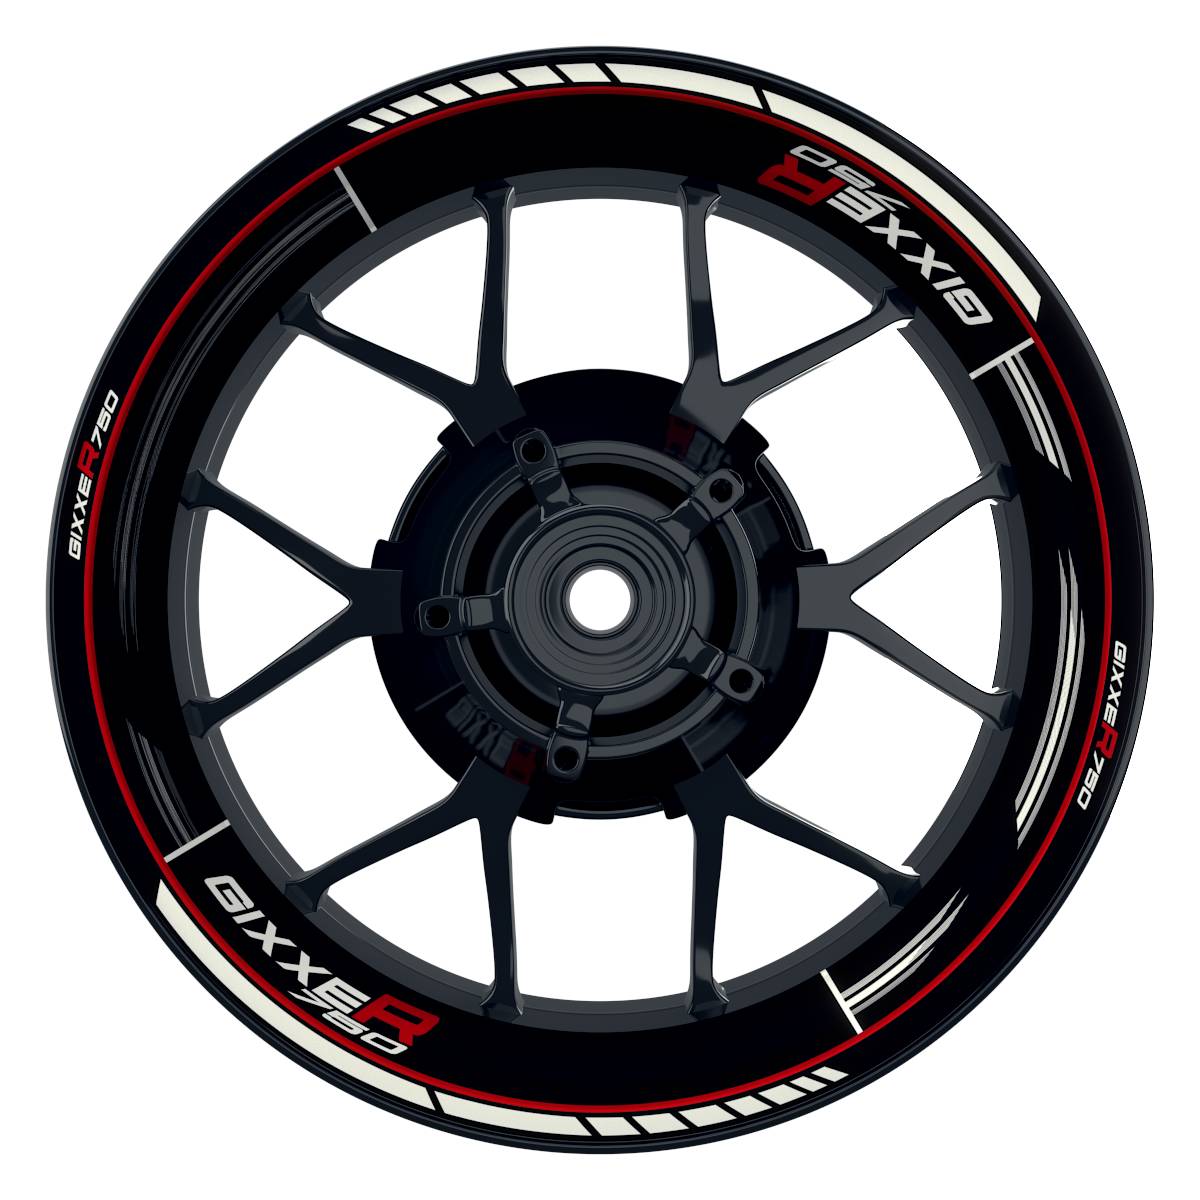 GIXXER750 Scratched schwarz rot Wheelsticker Felgenaufkleber